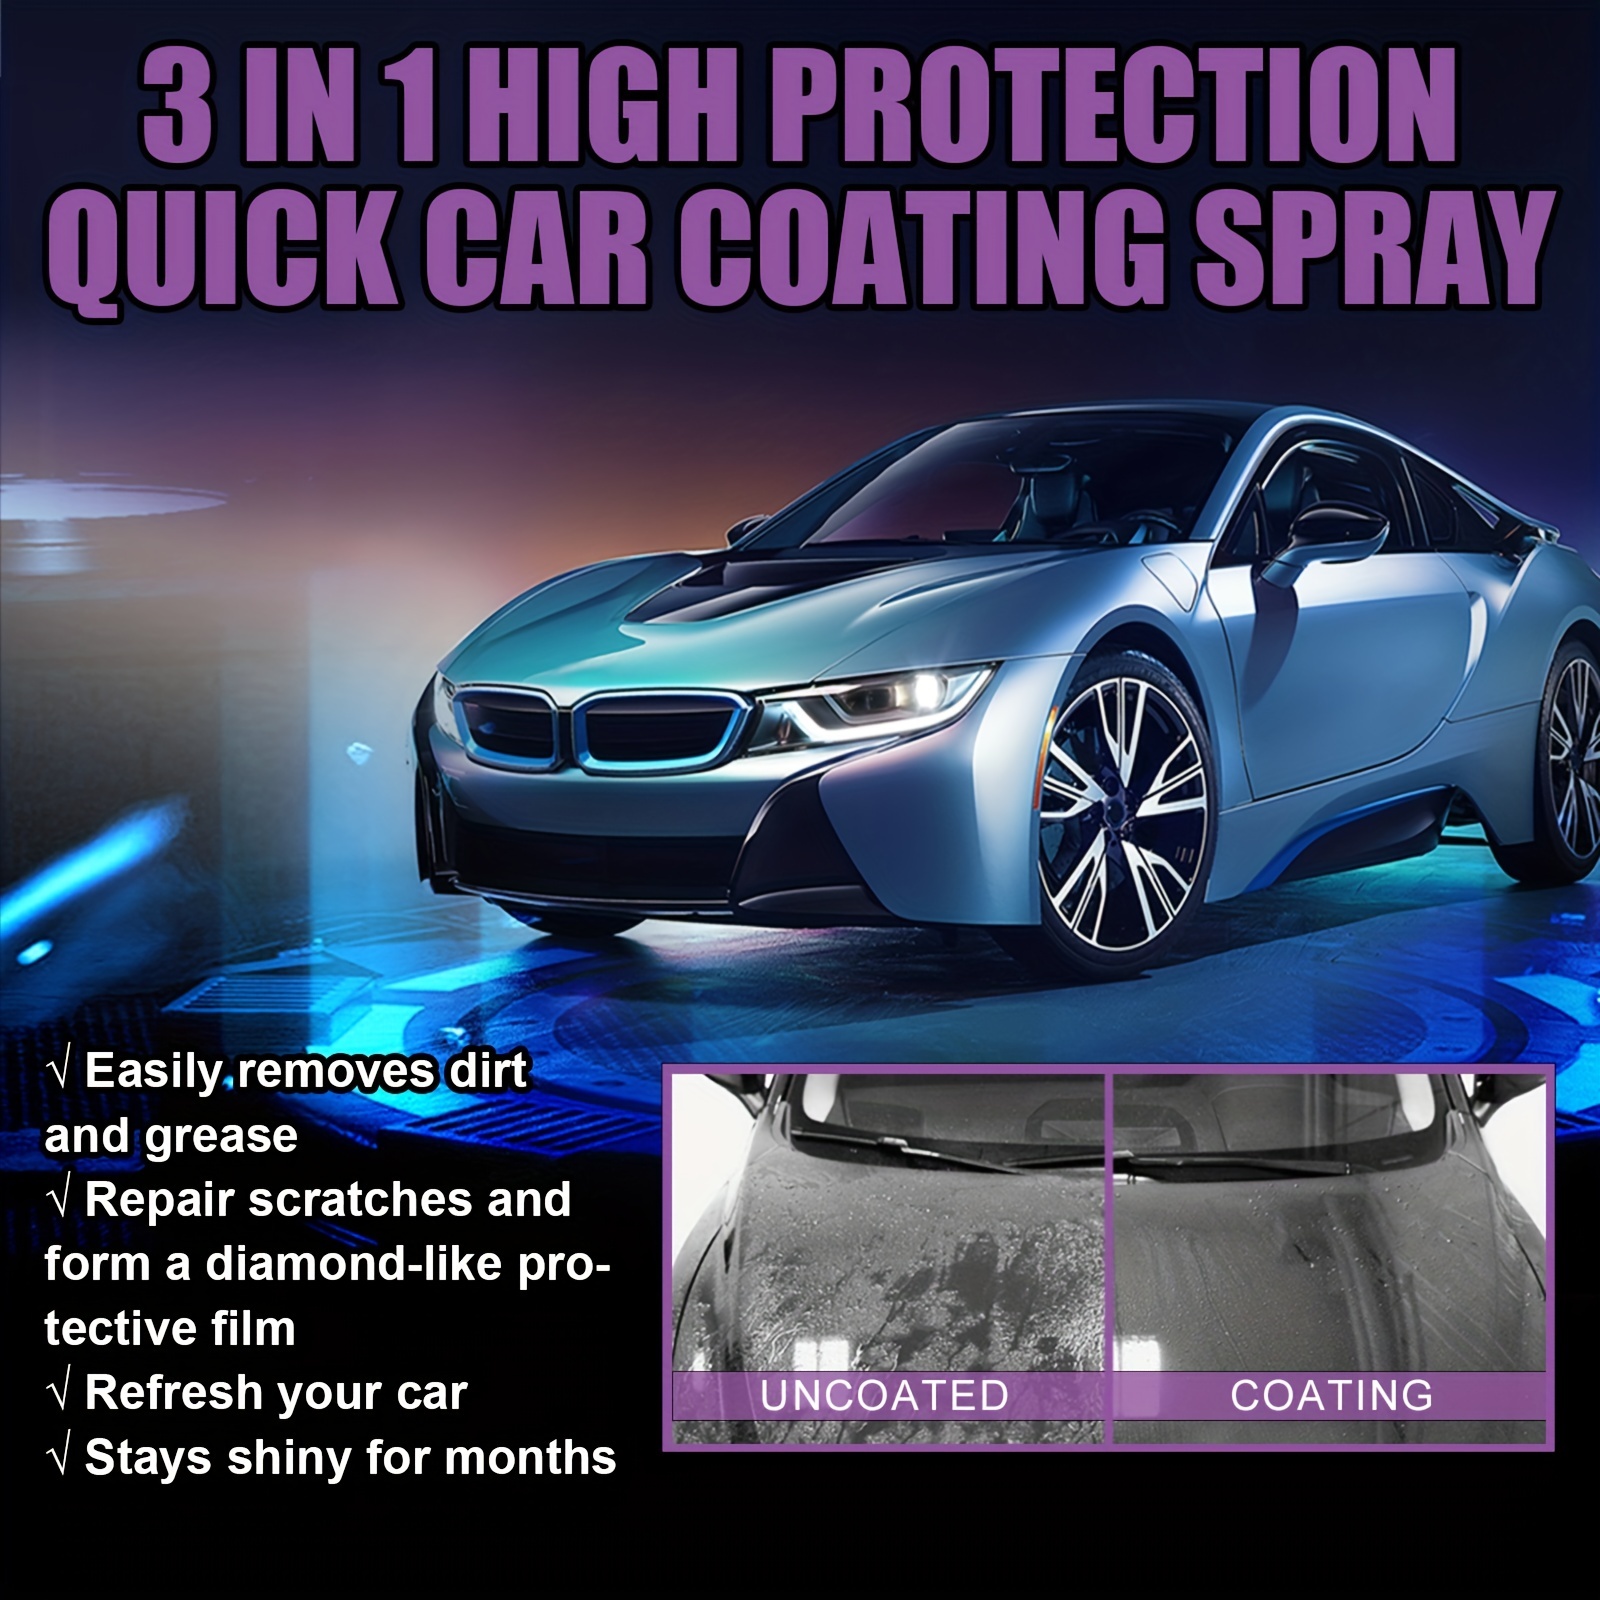 High Protection Fast Car Ceramic Coating Spray, Car Coating Fast